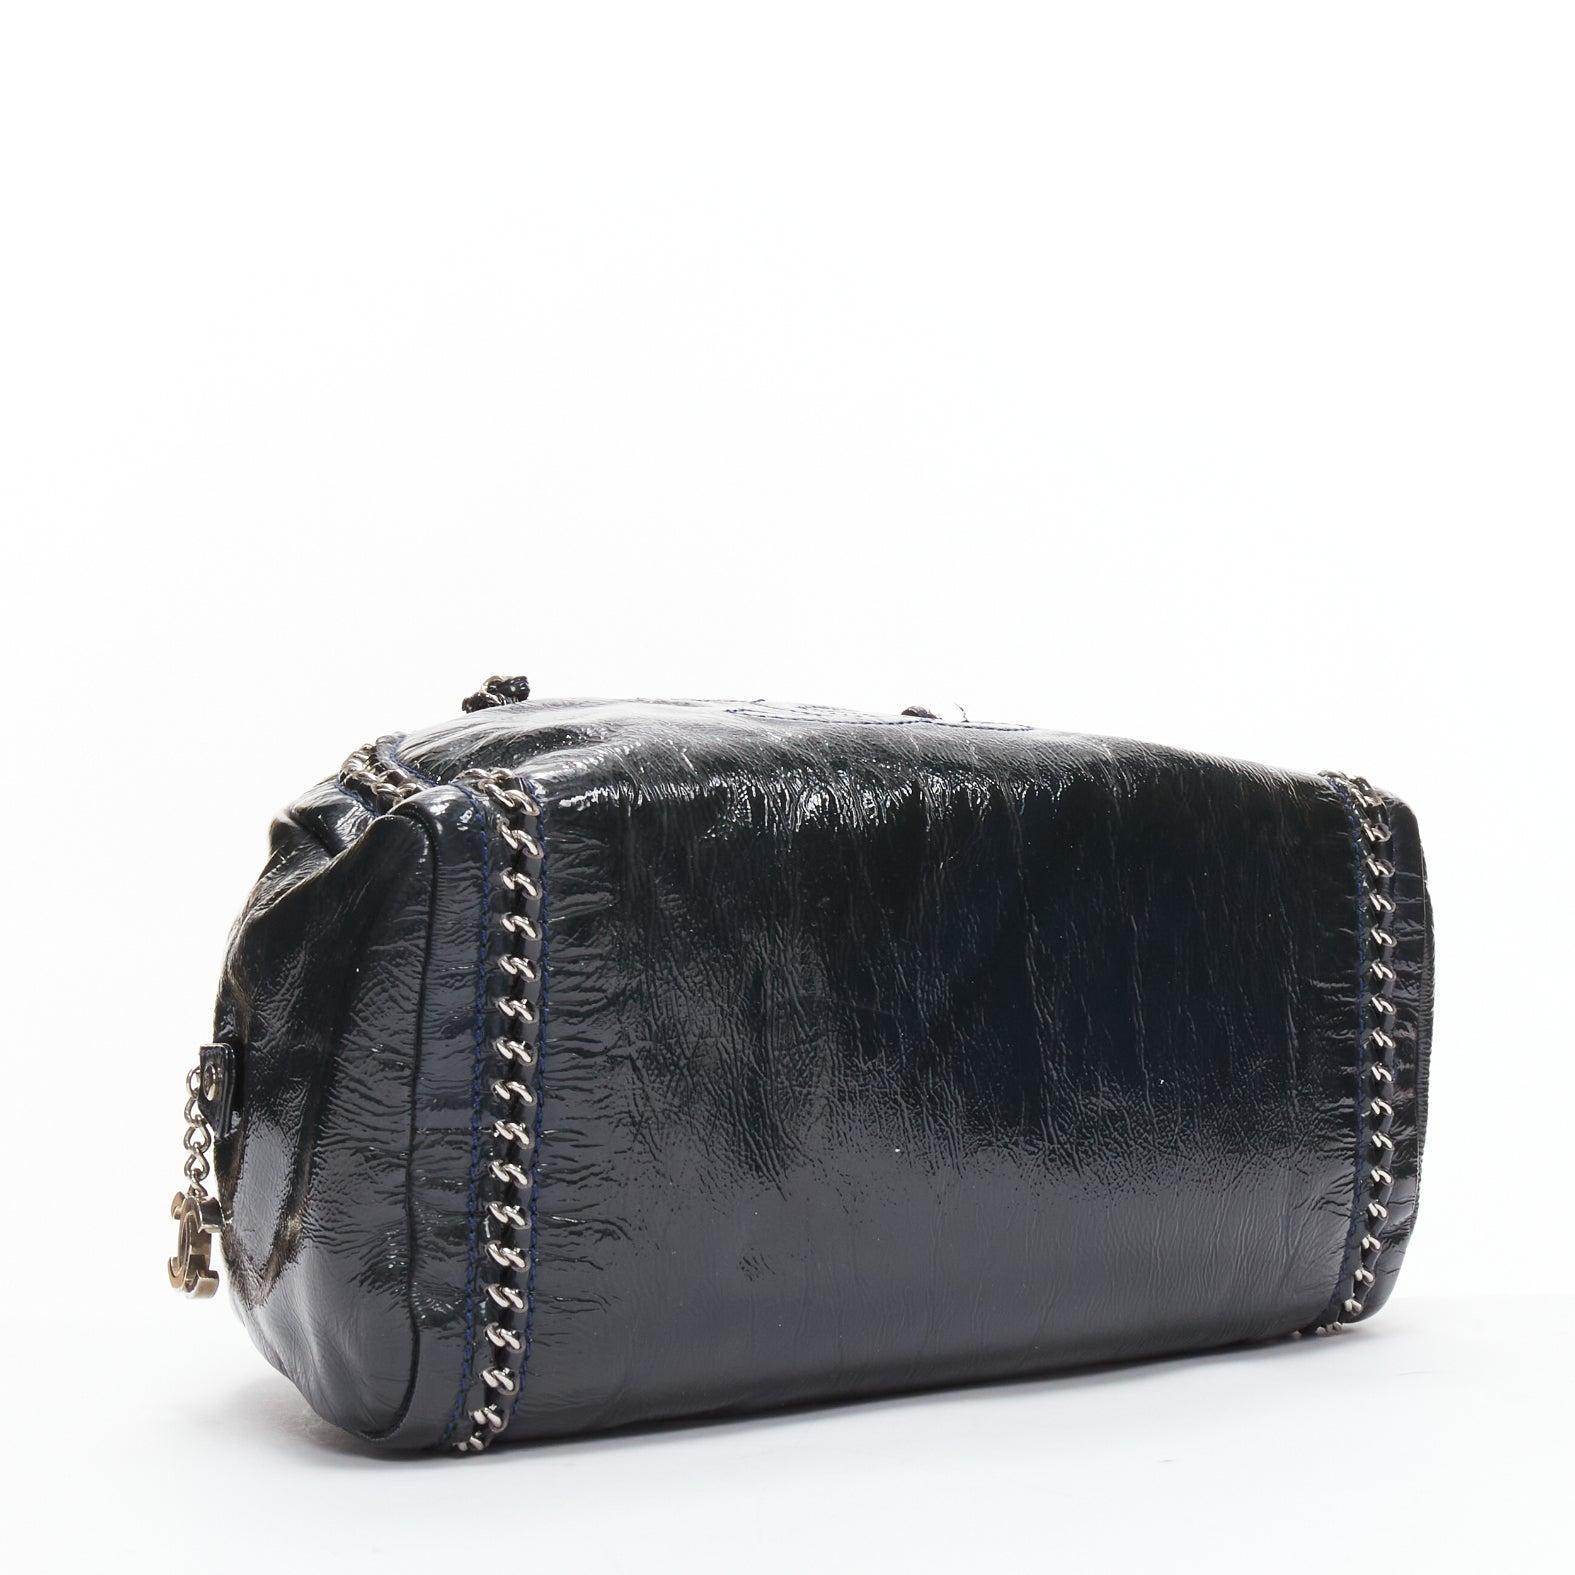 CHANEL Ligne Bowler black patent leather CC woven chain satchel bag For Sale 1